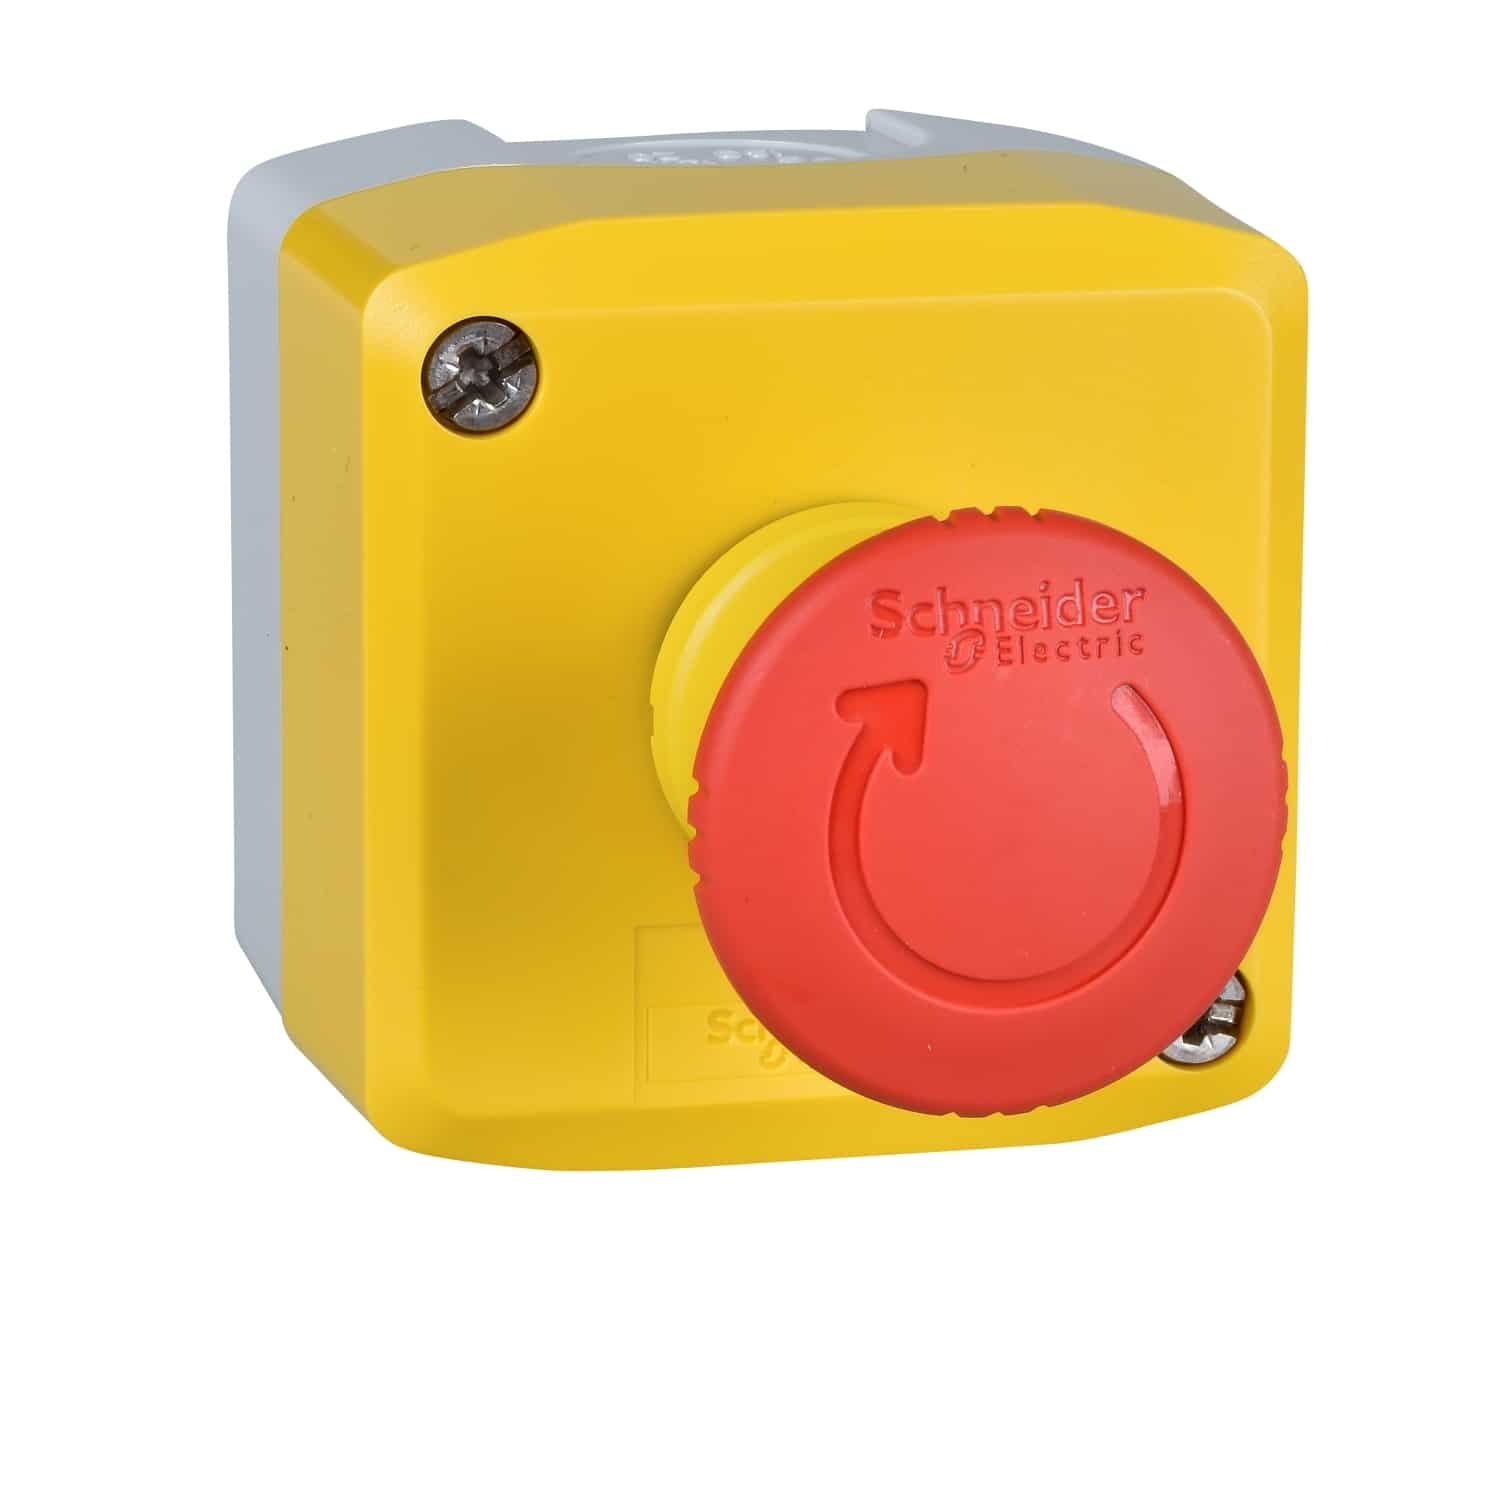 Schneider Electric - Harmony XAL - boite jaune arret urgence rouge - pousser tourner - 2O - D40